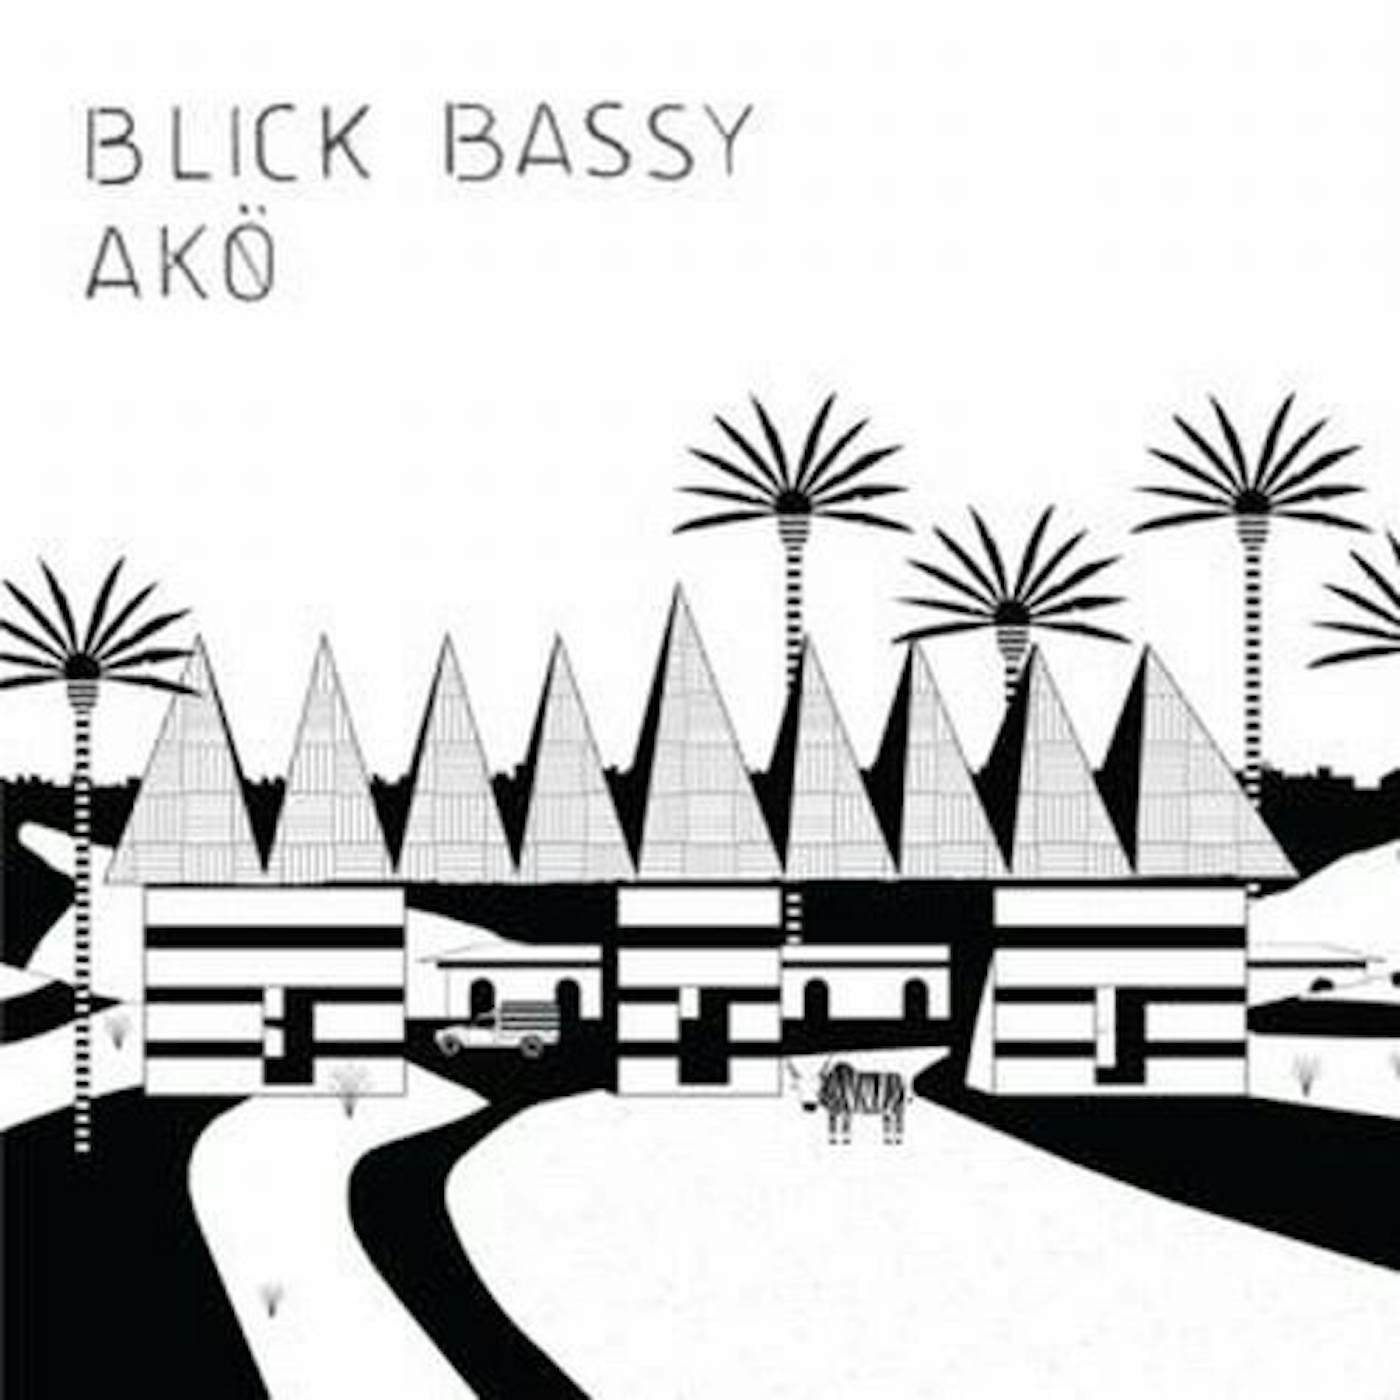 Blick Bassy AKO Vinyl Record